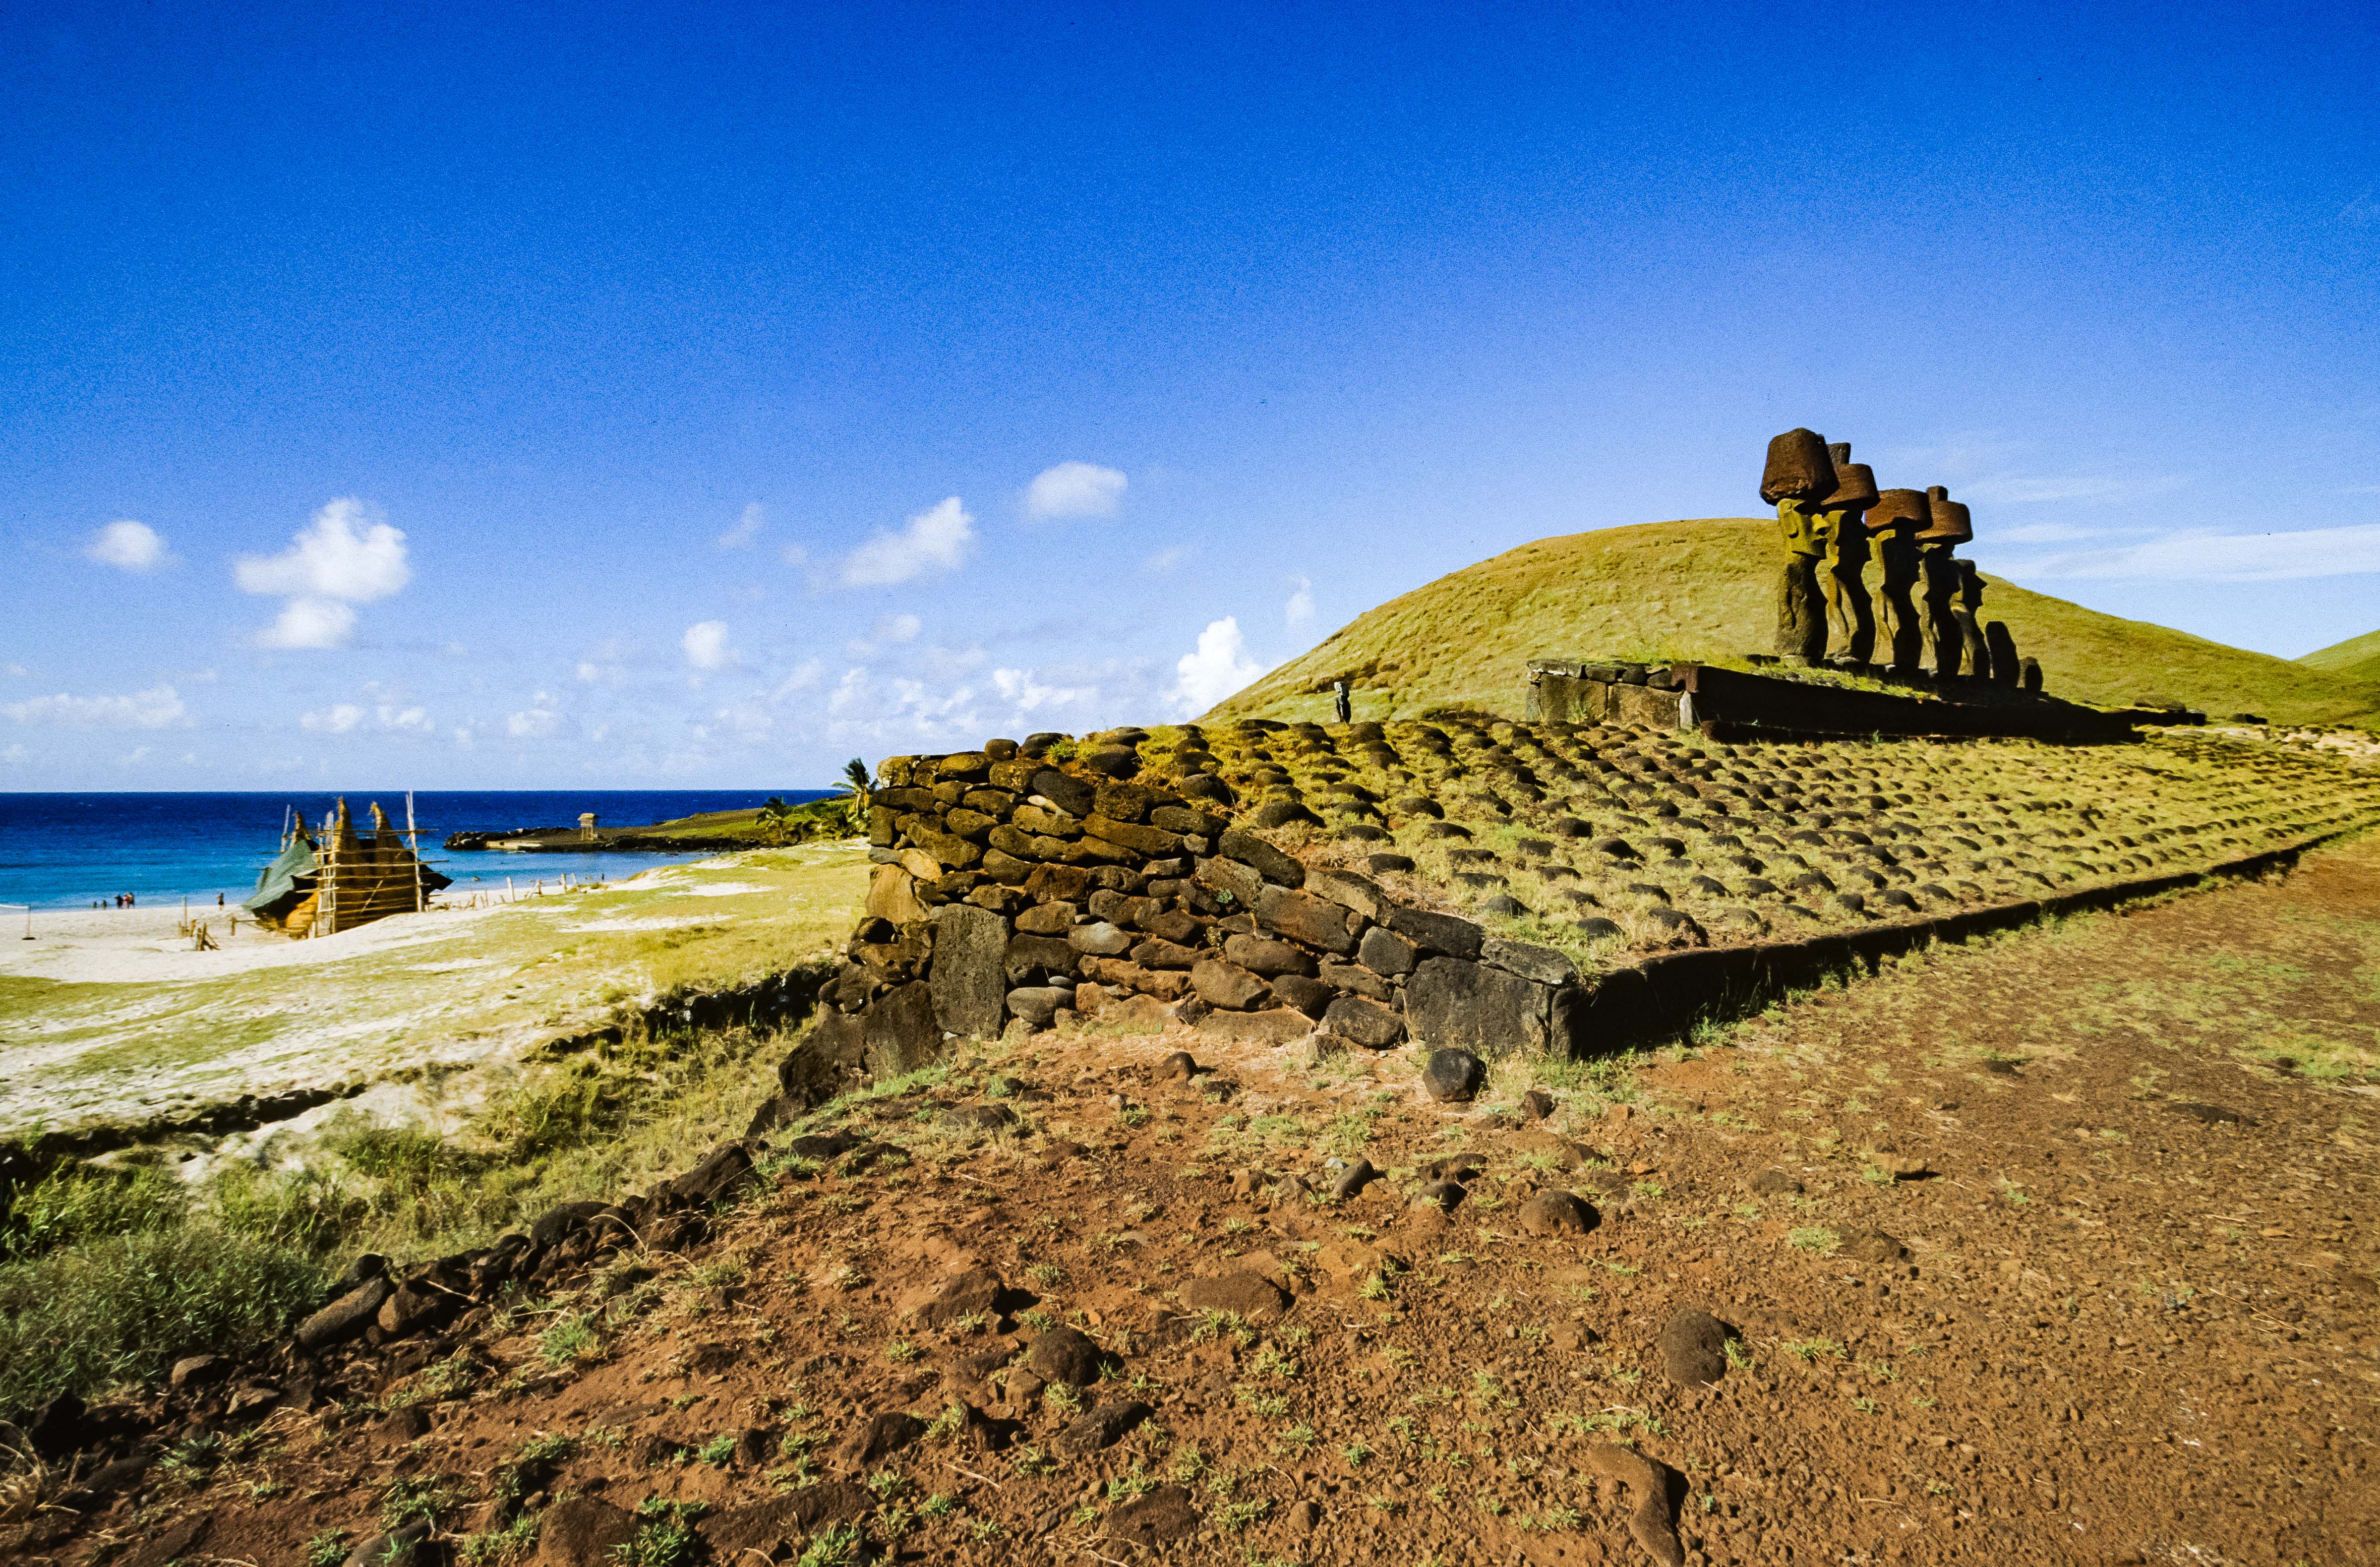 Easter Island, Reed Ship and Moai at Anakena Beach, 1997